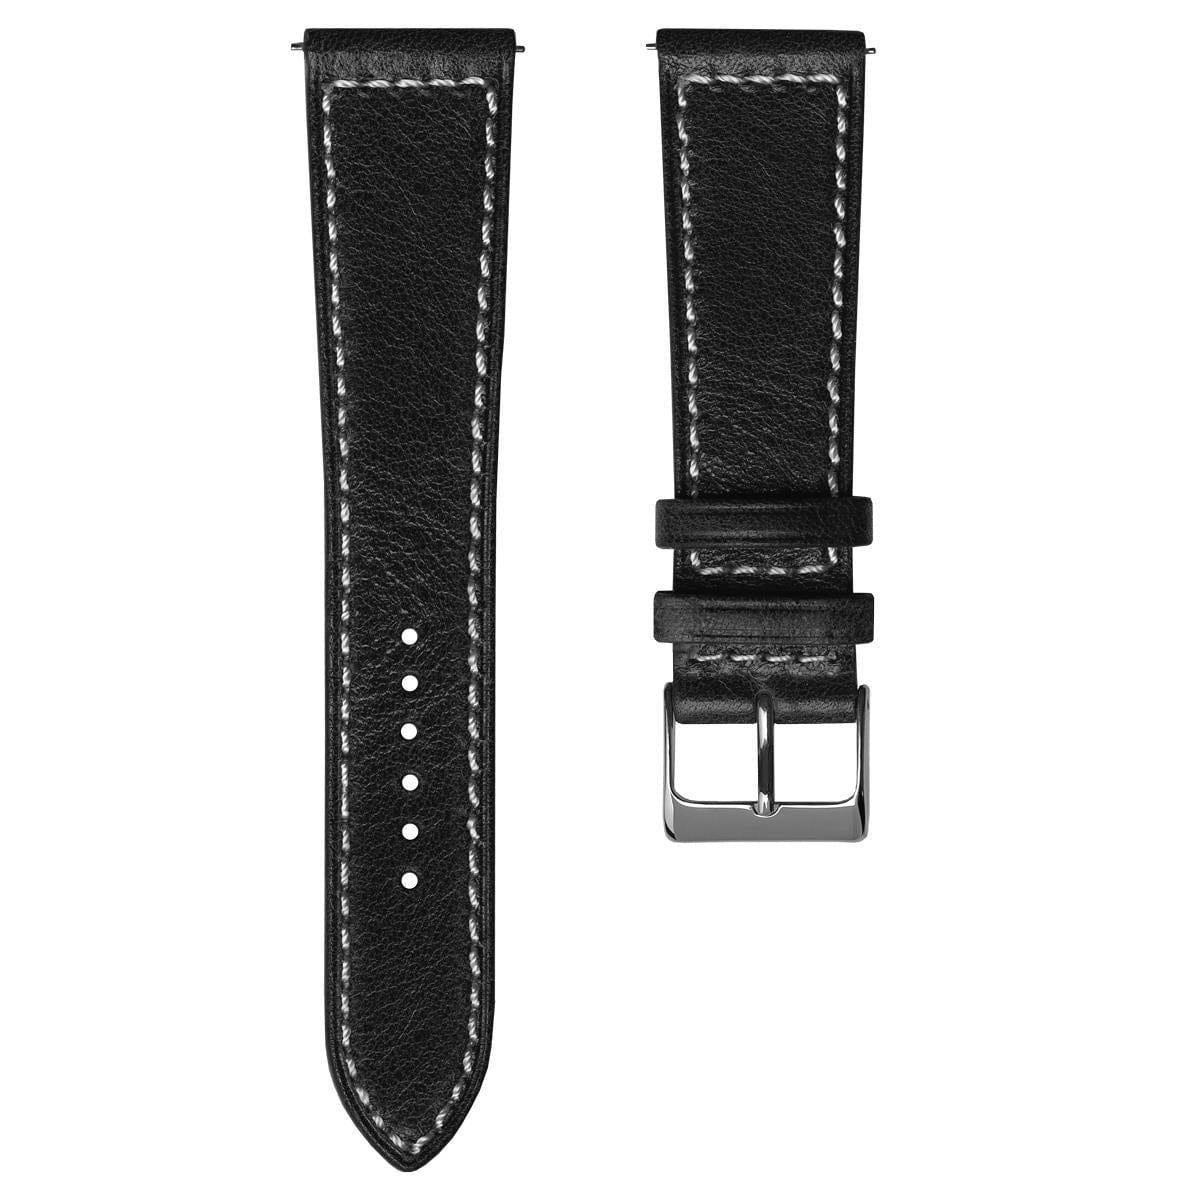 Dulas Vintage Leather Quick Release Watch Strap - Black / White Stitch